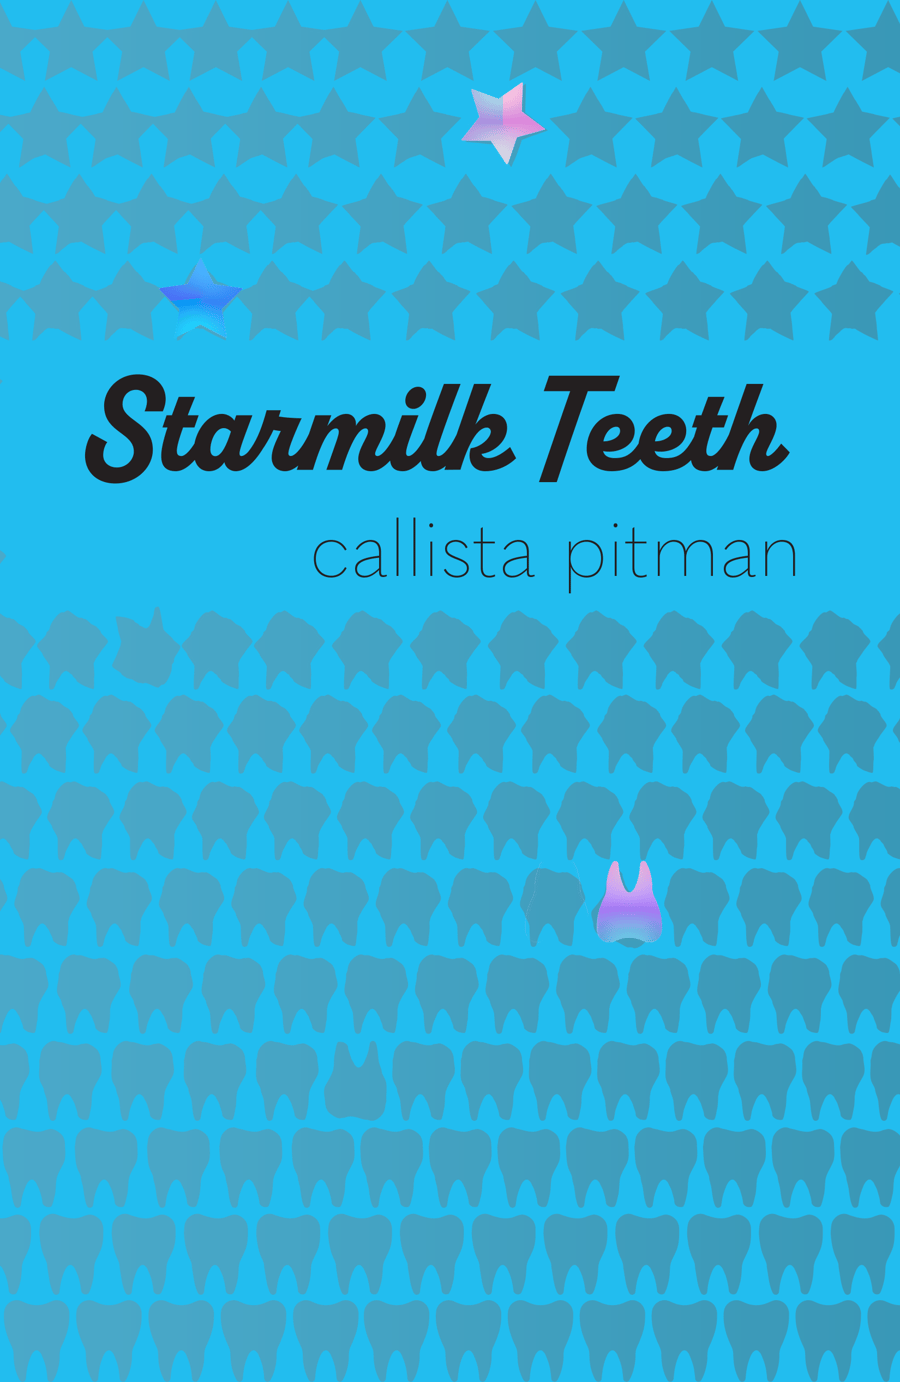 Image of "Starmilk Teeth" by Callista Pitman